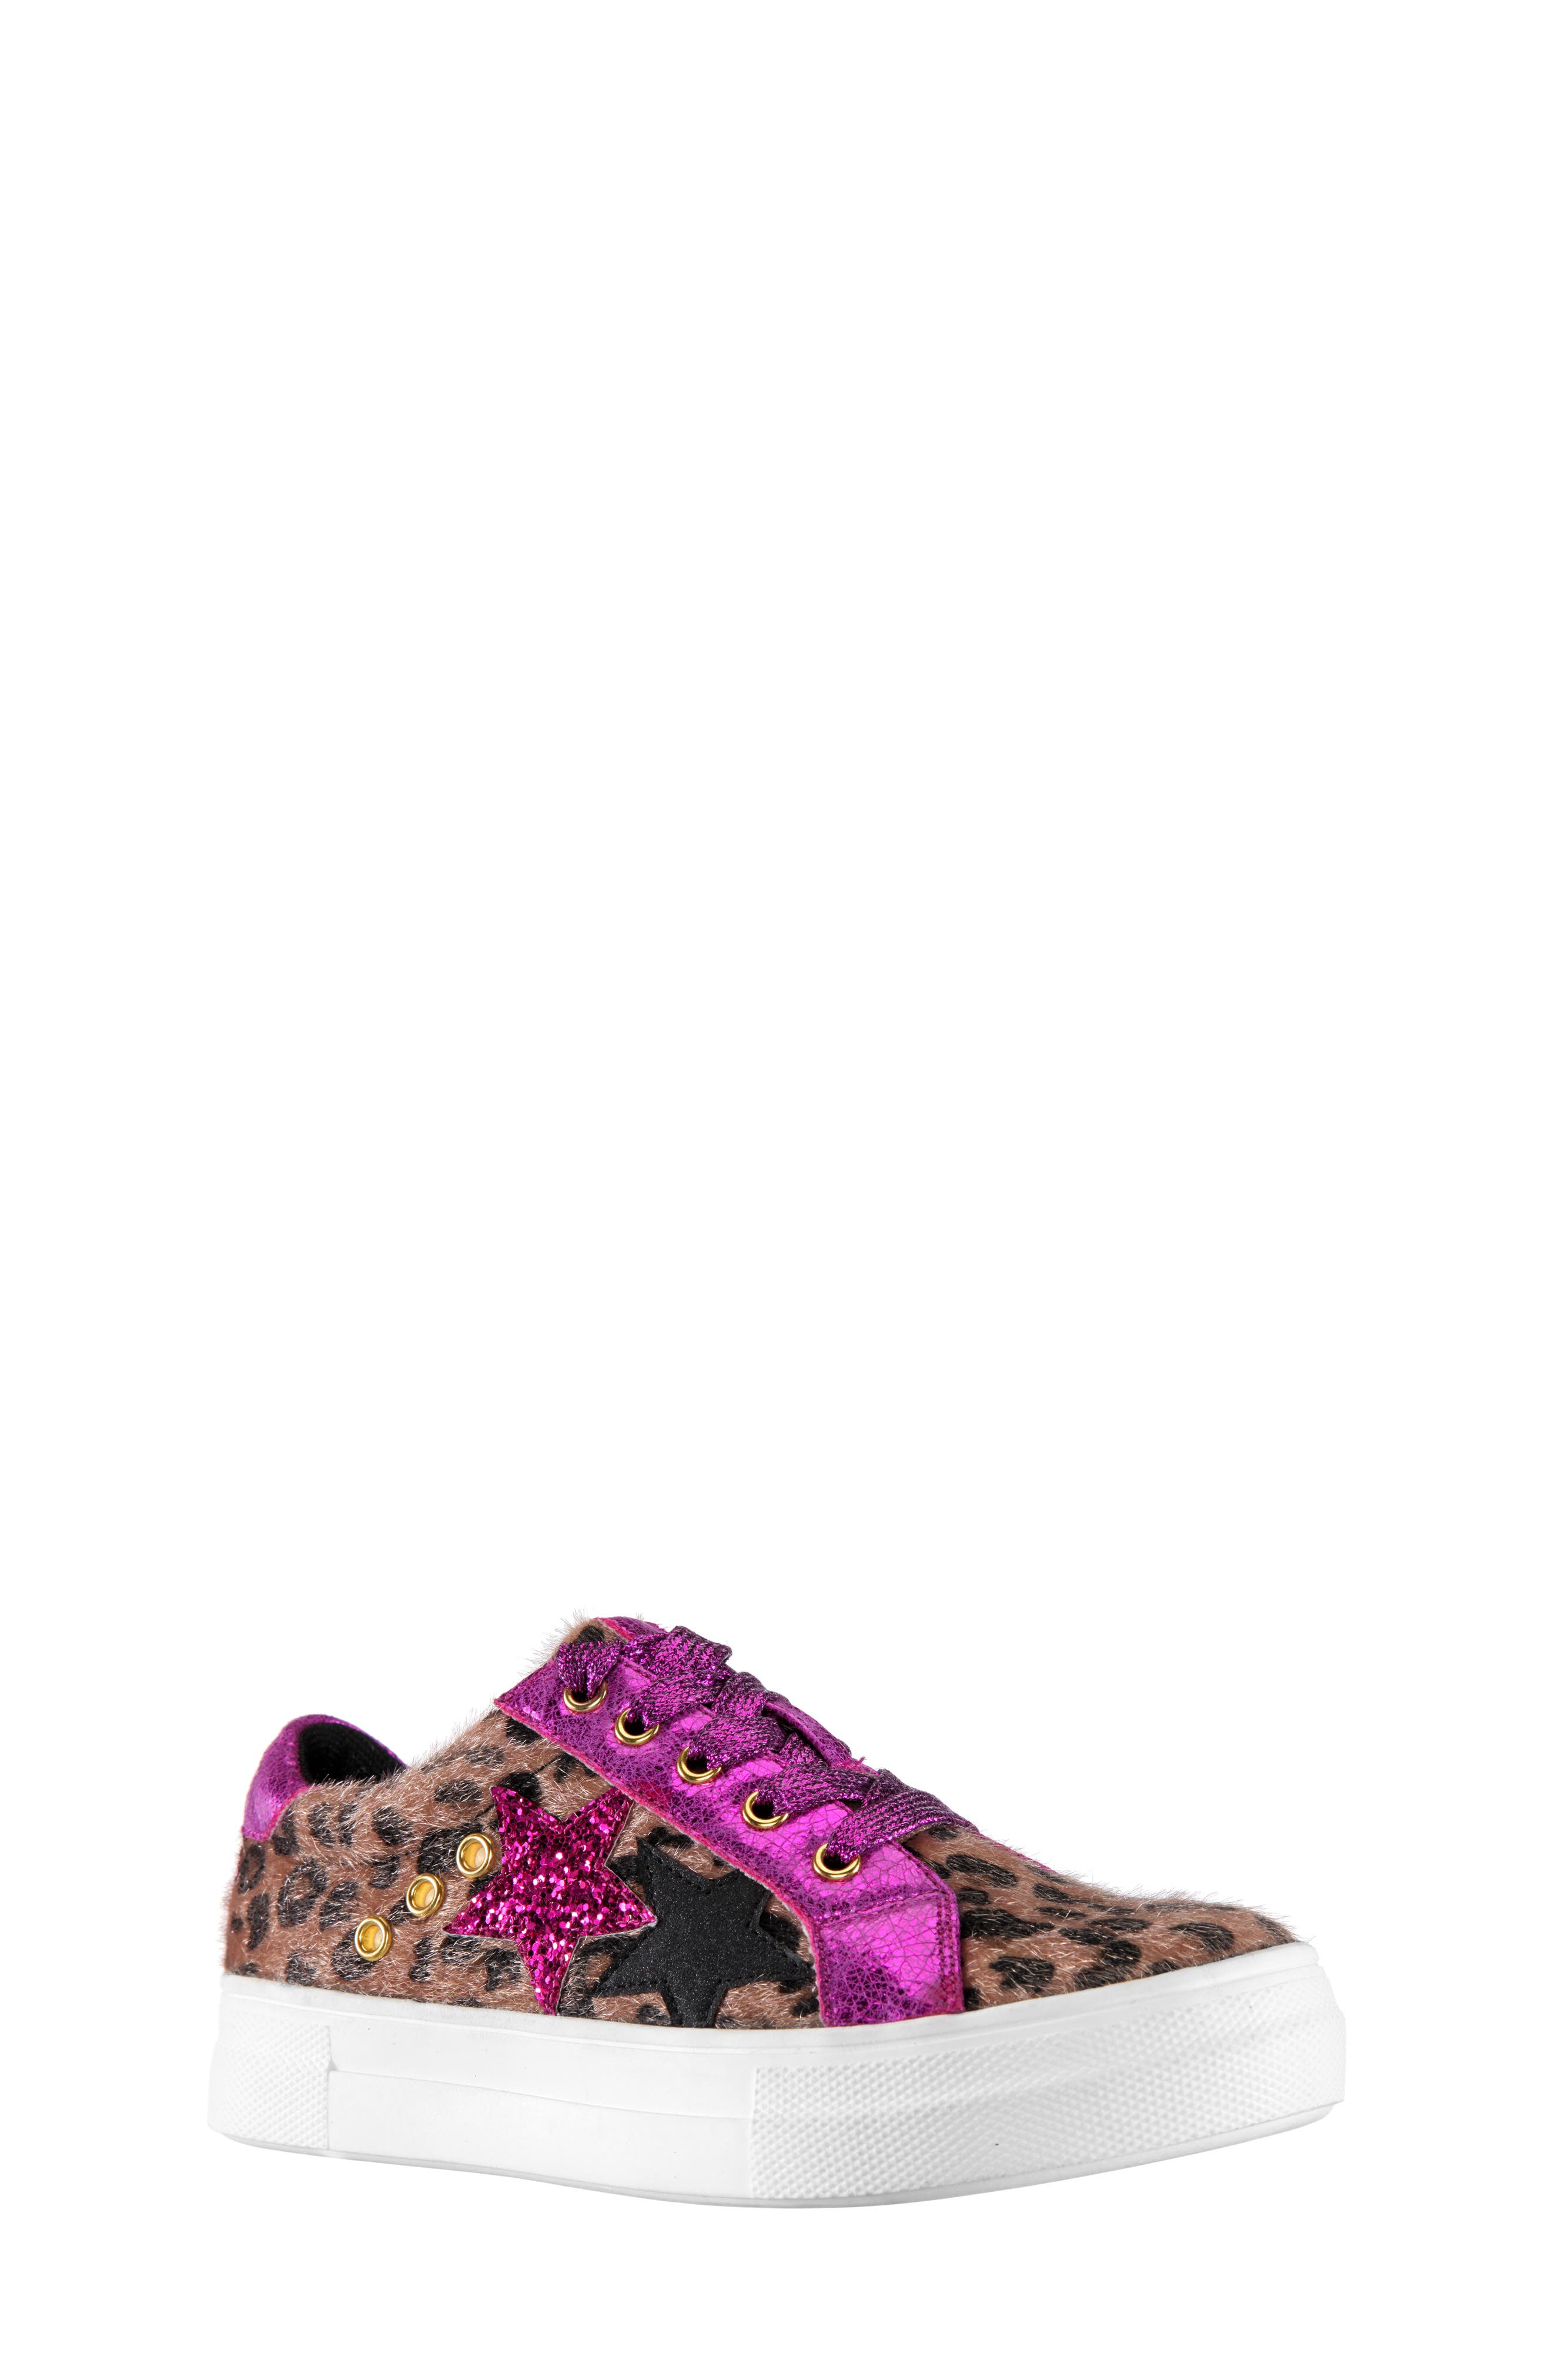 UPC 794378405184 product image for Girl's Nina Lizzet Glitter Sneaker, Size 5 M - Pink | upcitemdb.com